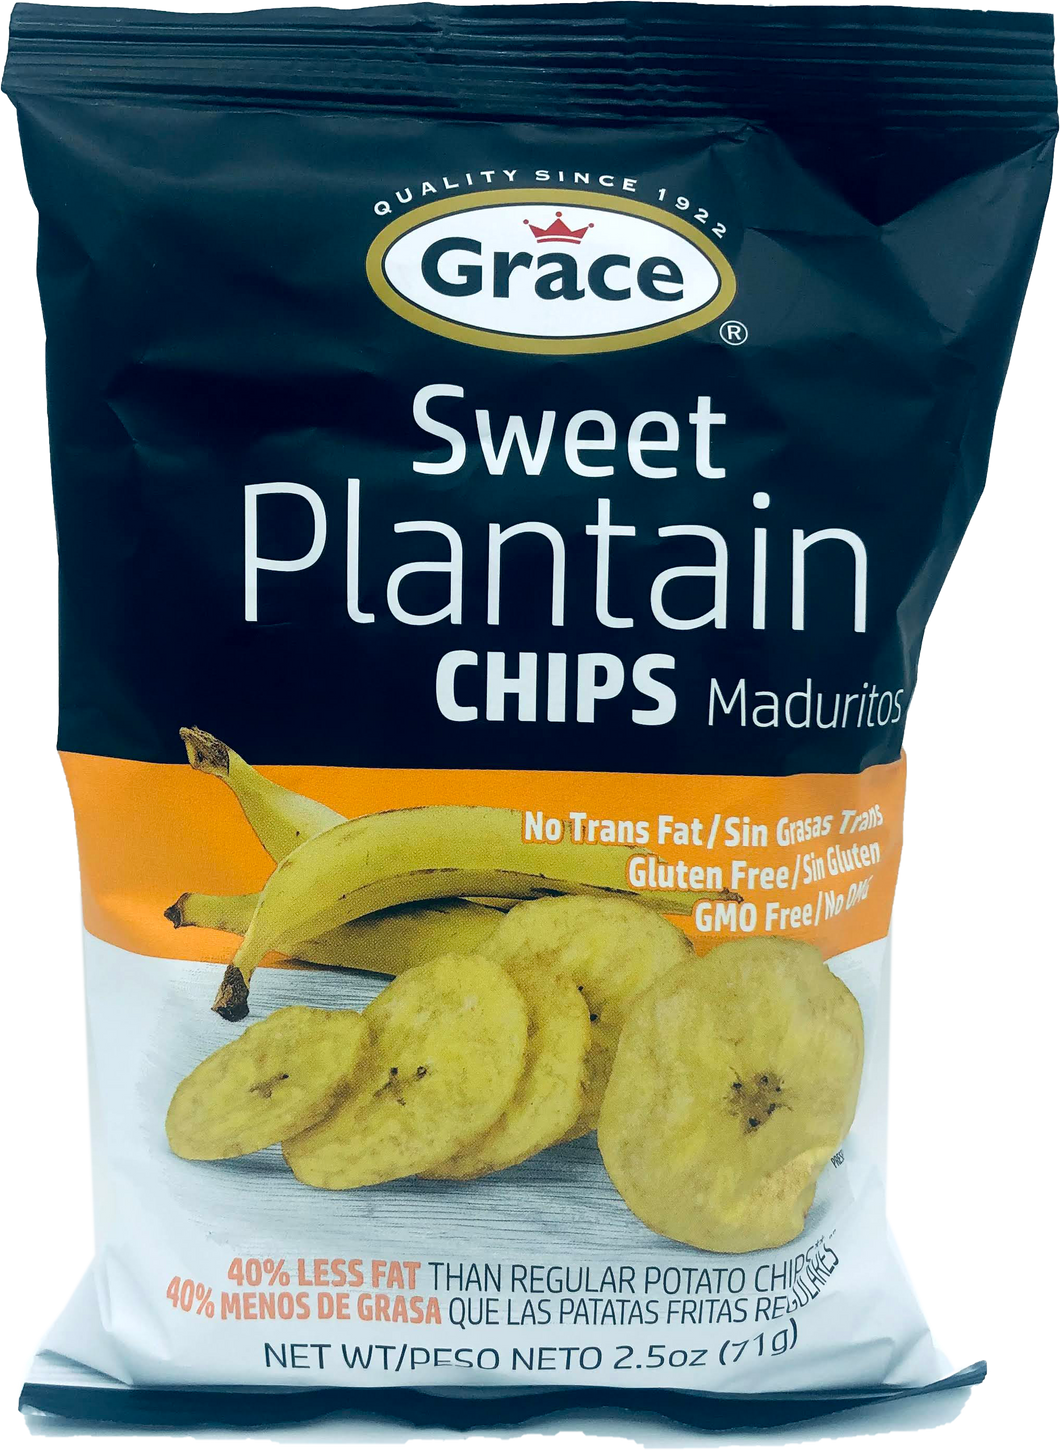 Grace Sweet Plantain Chip